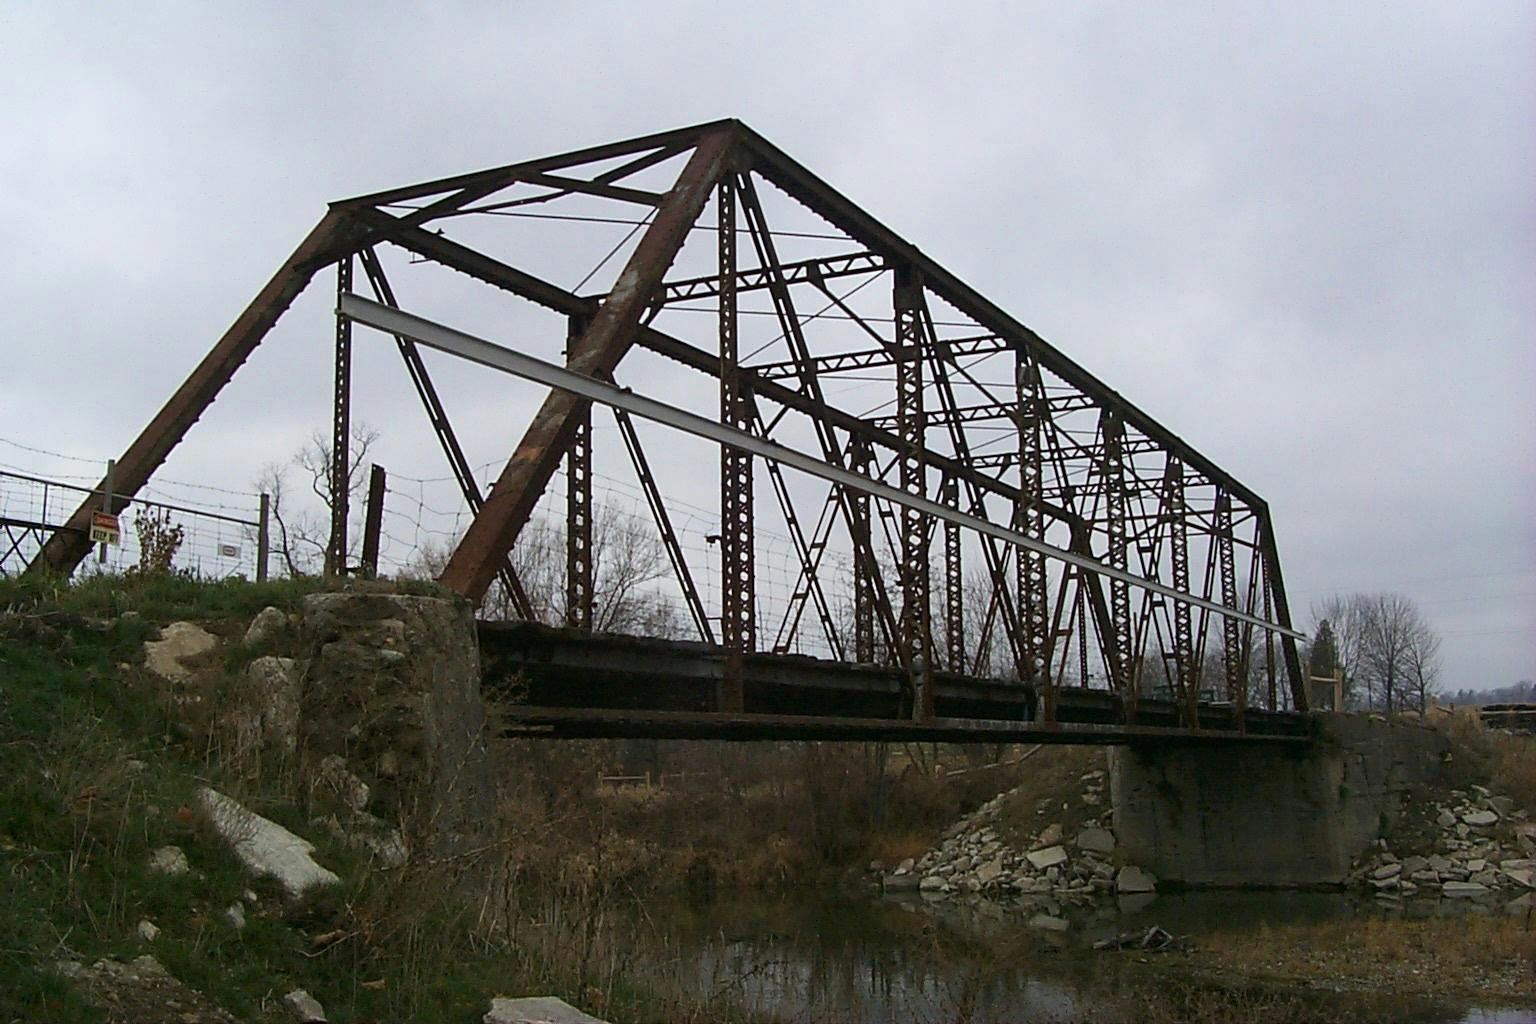 Stanley Piper Street Steel Truss Bridge